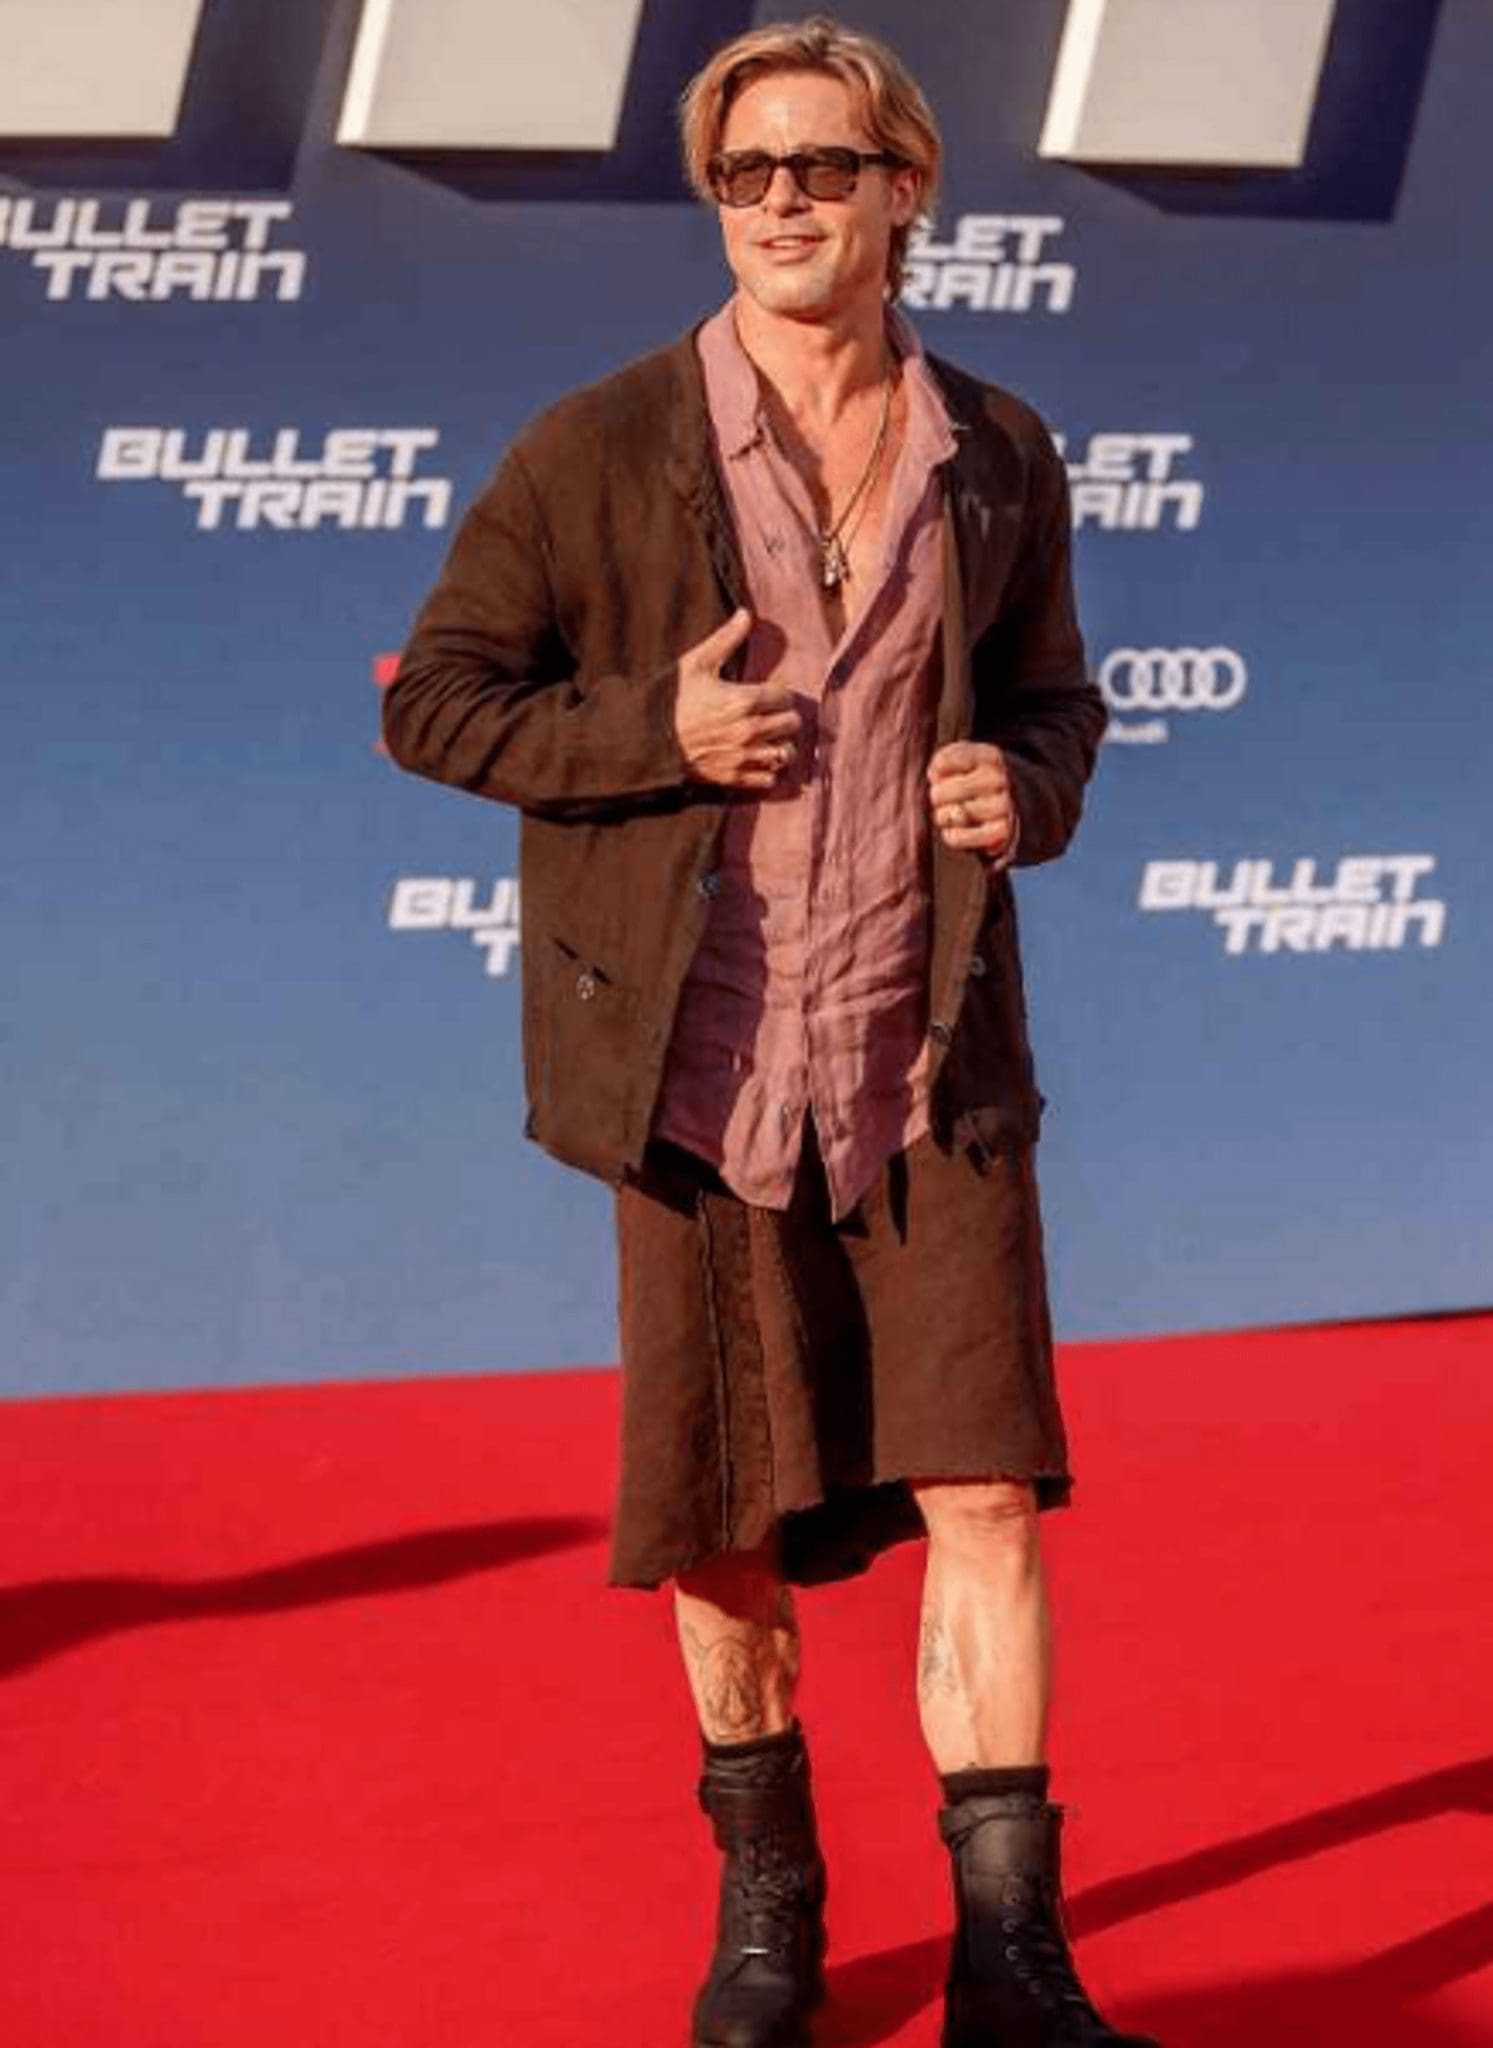 At The Bullet Train Movie Premiere, Brad Pitt Donned A Linen Skirt